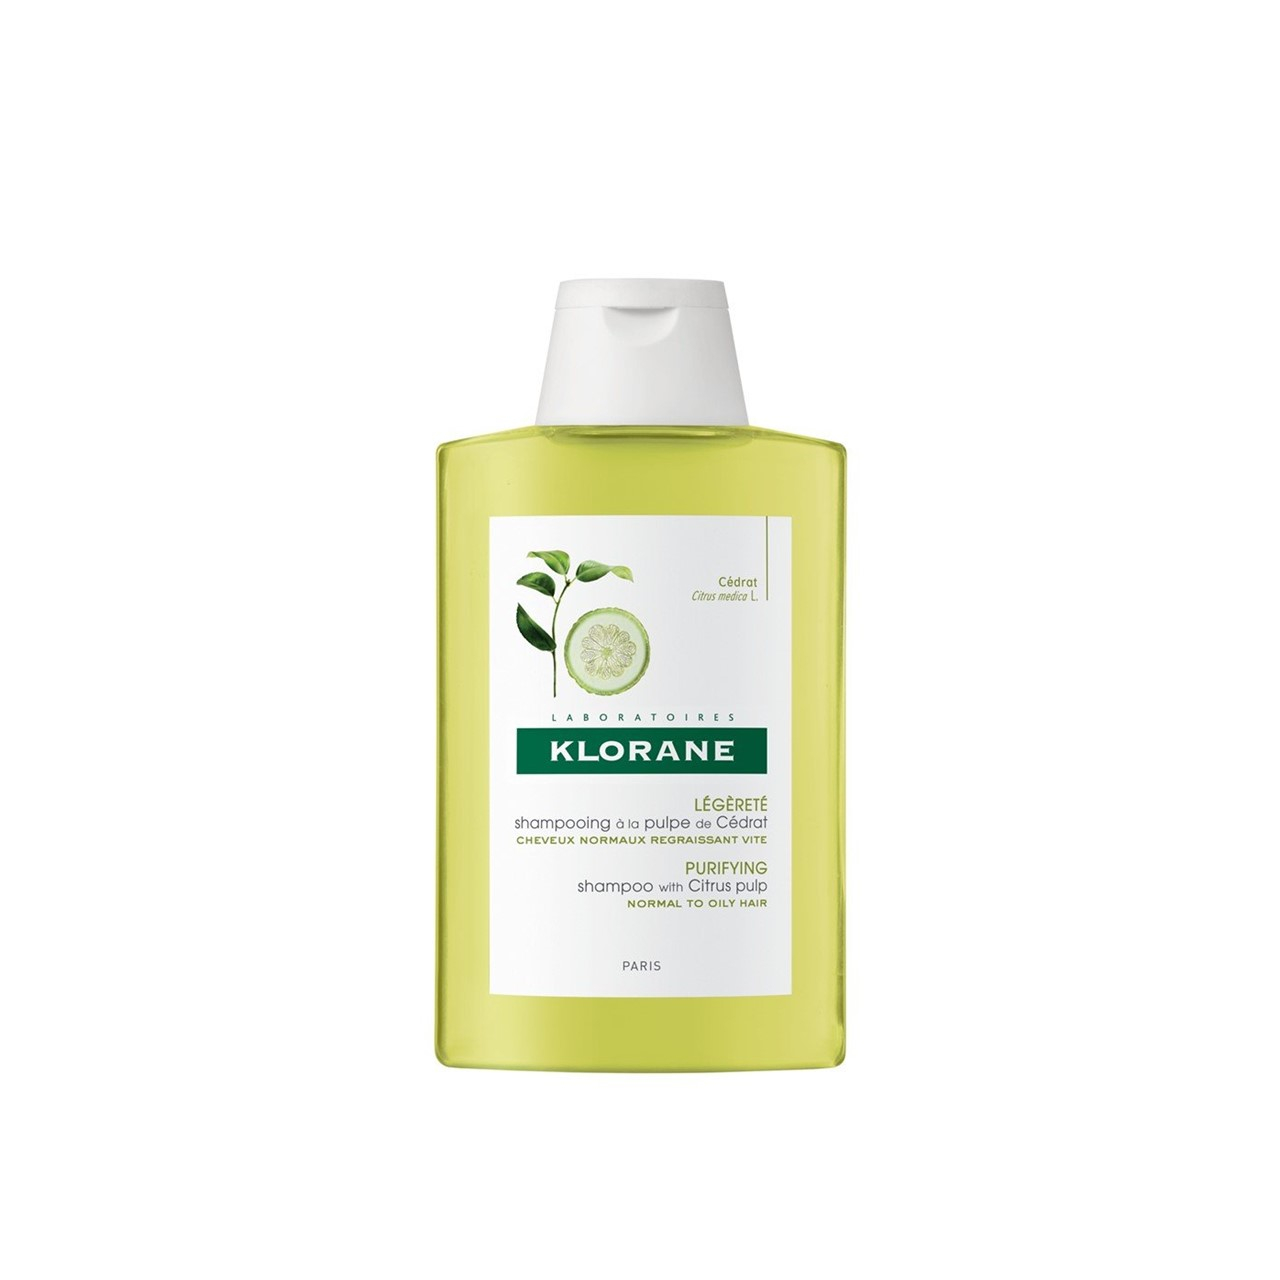 Klorane Purifying Shampoo with Citrus Pulp 200ml (6.76fl oz)